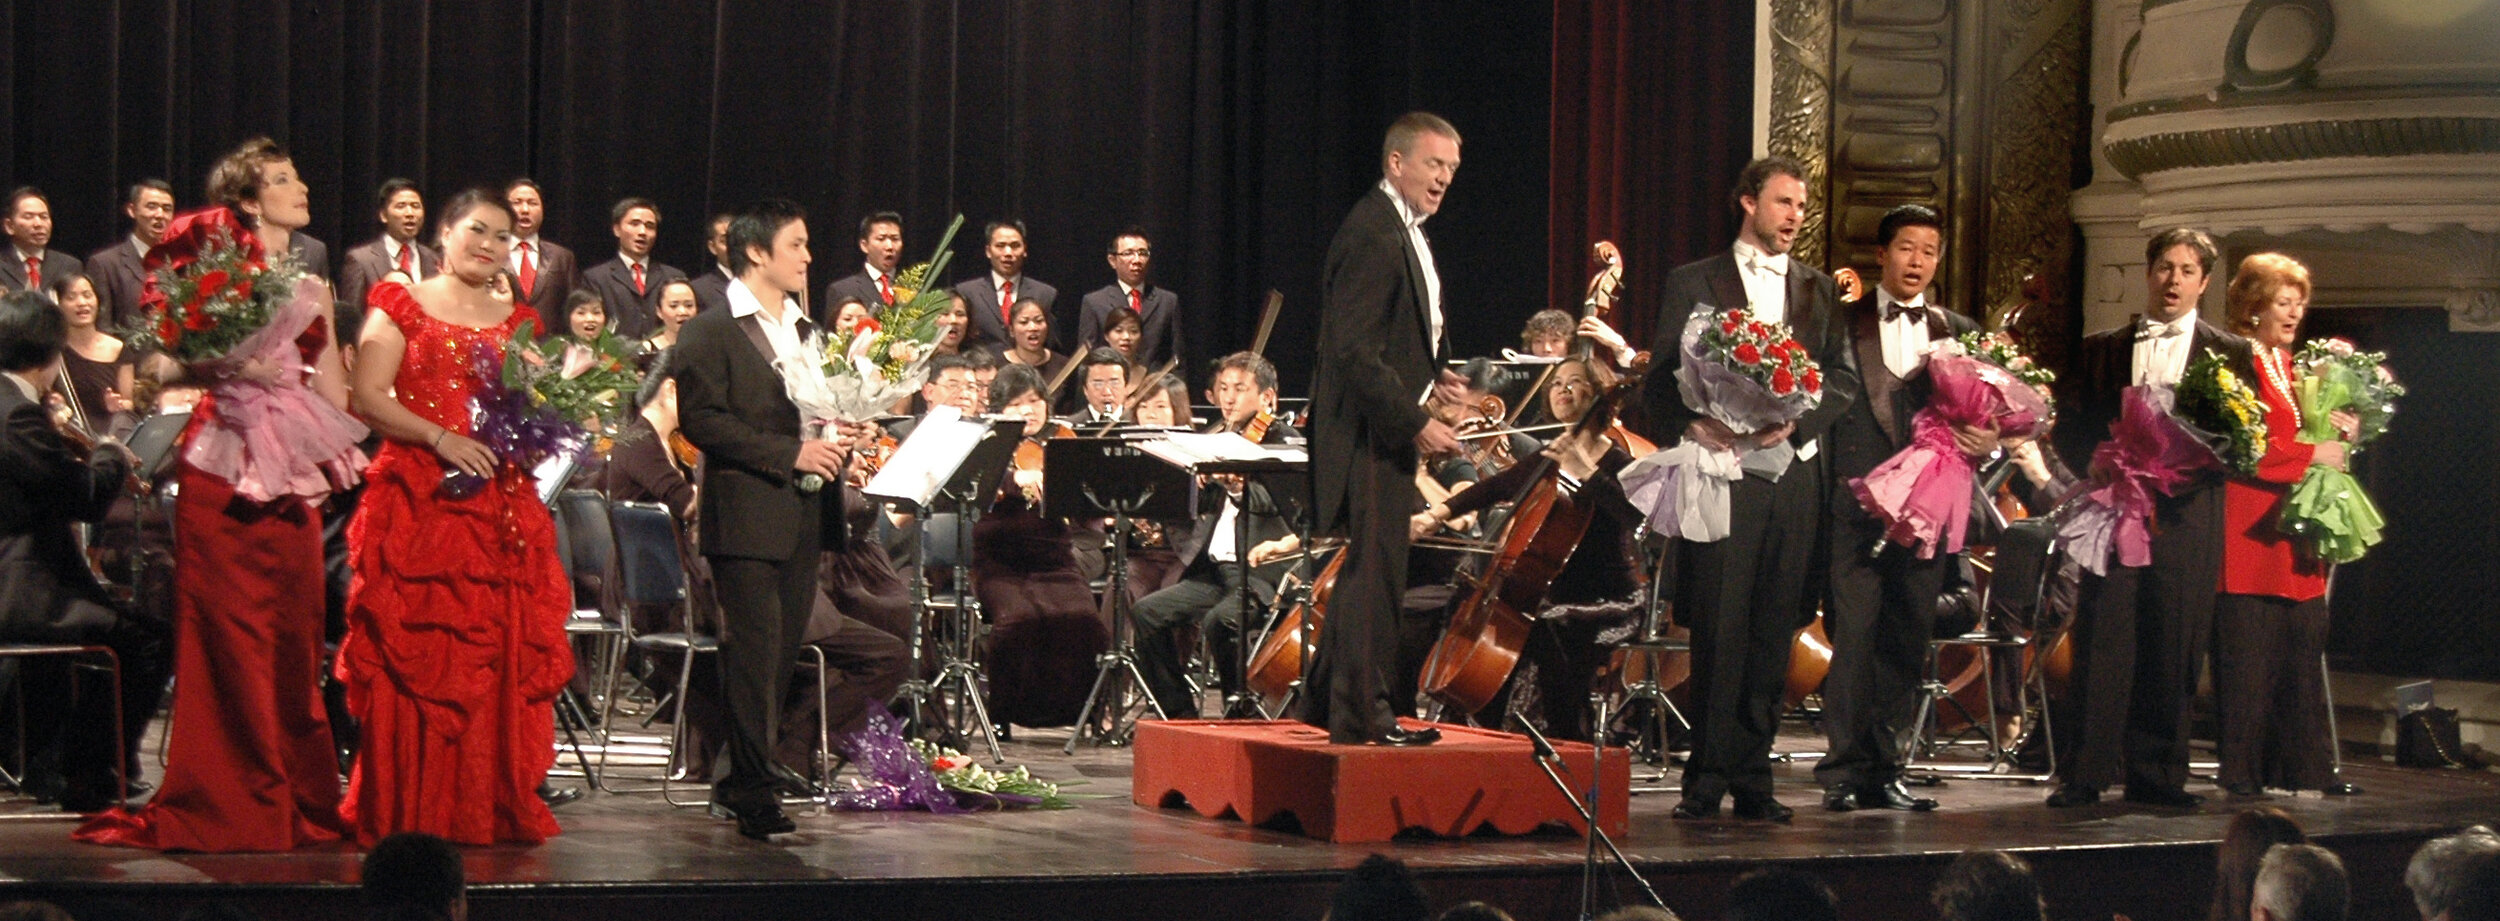 2011 Vietnam gala.jpg